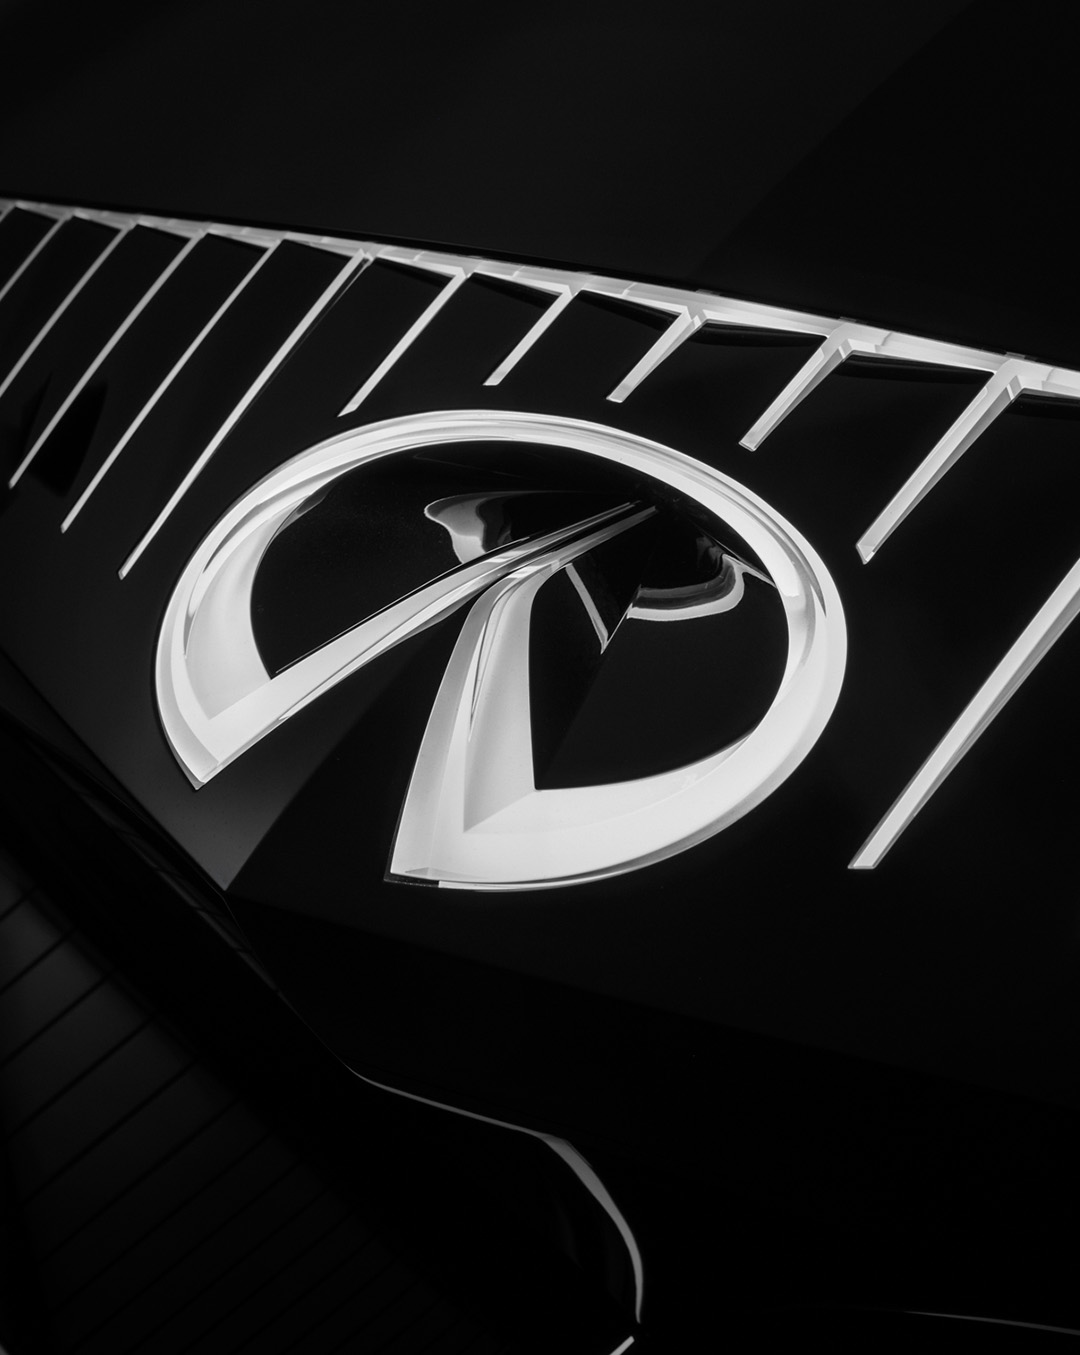 Close-up view of the INFINITI Vision Qe electric car’s emblem